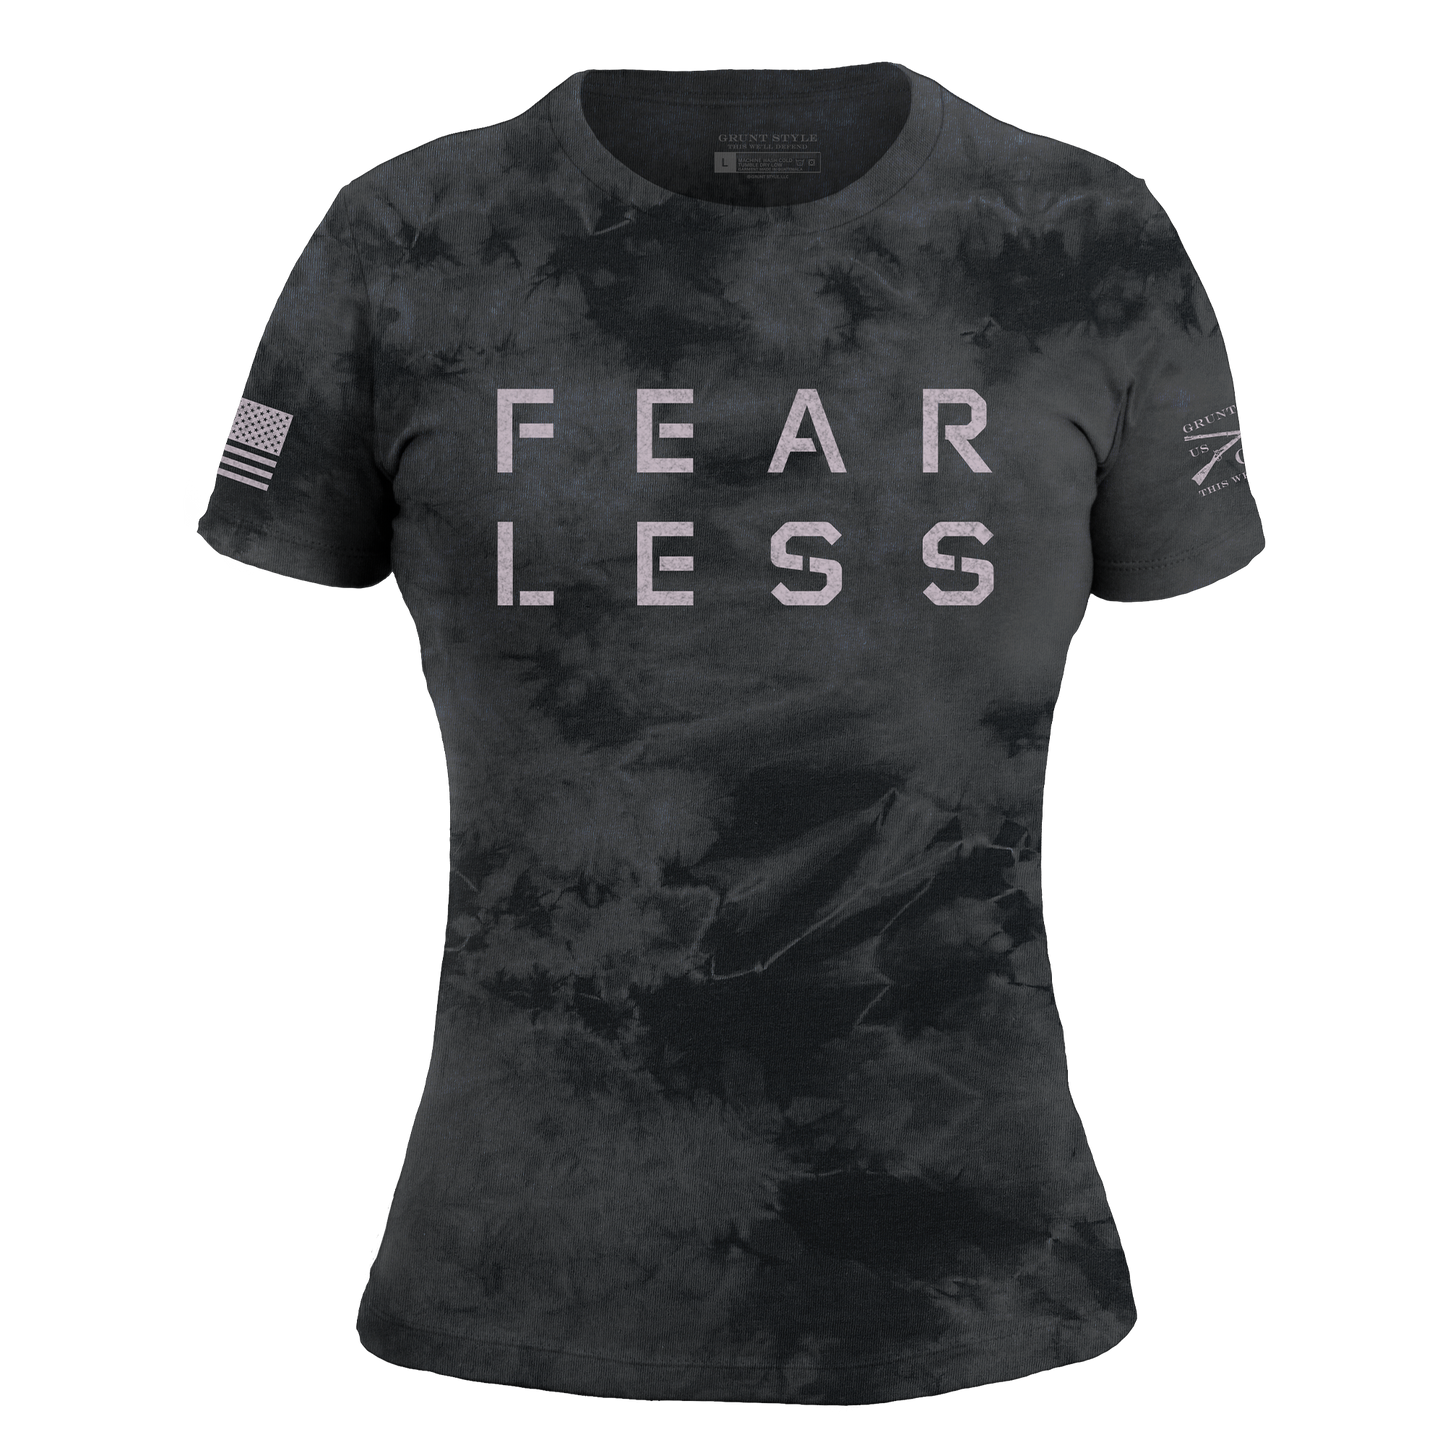 womens patriotic shirts - fear less 